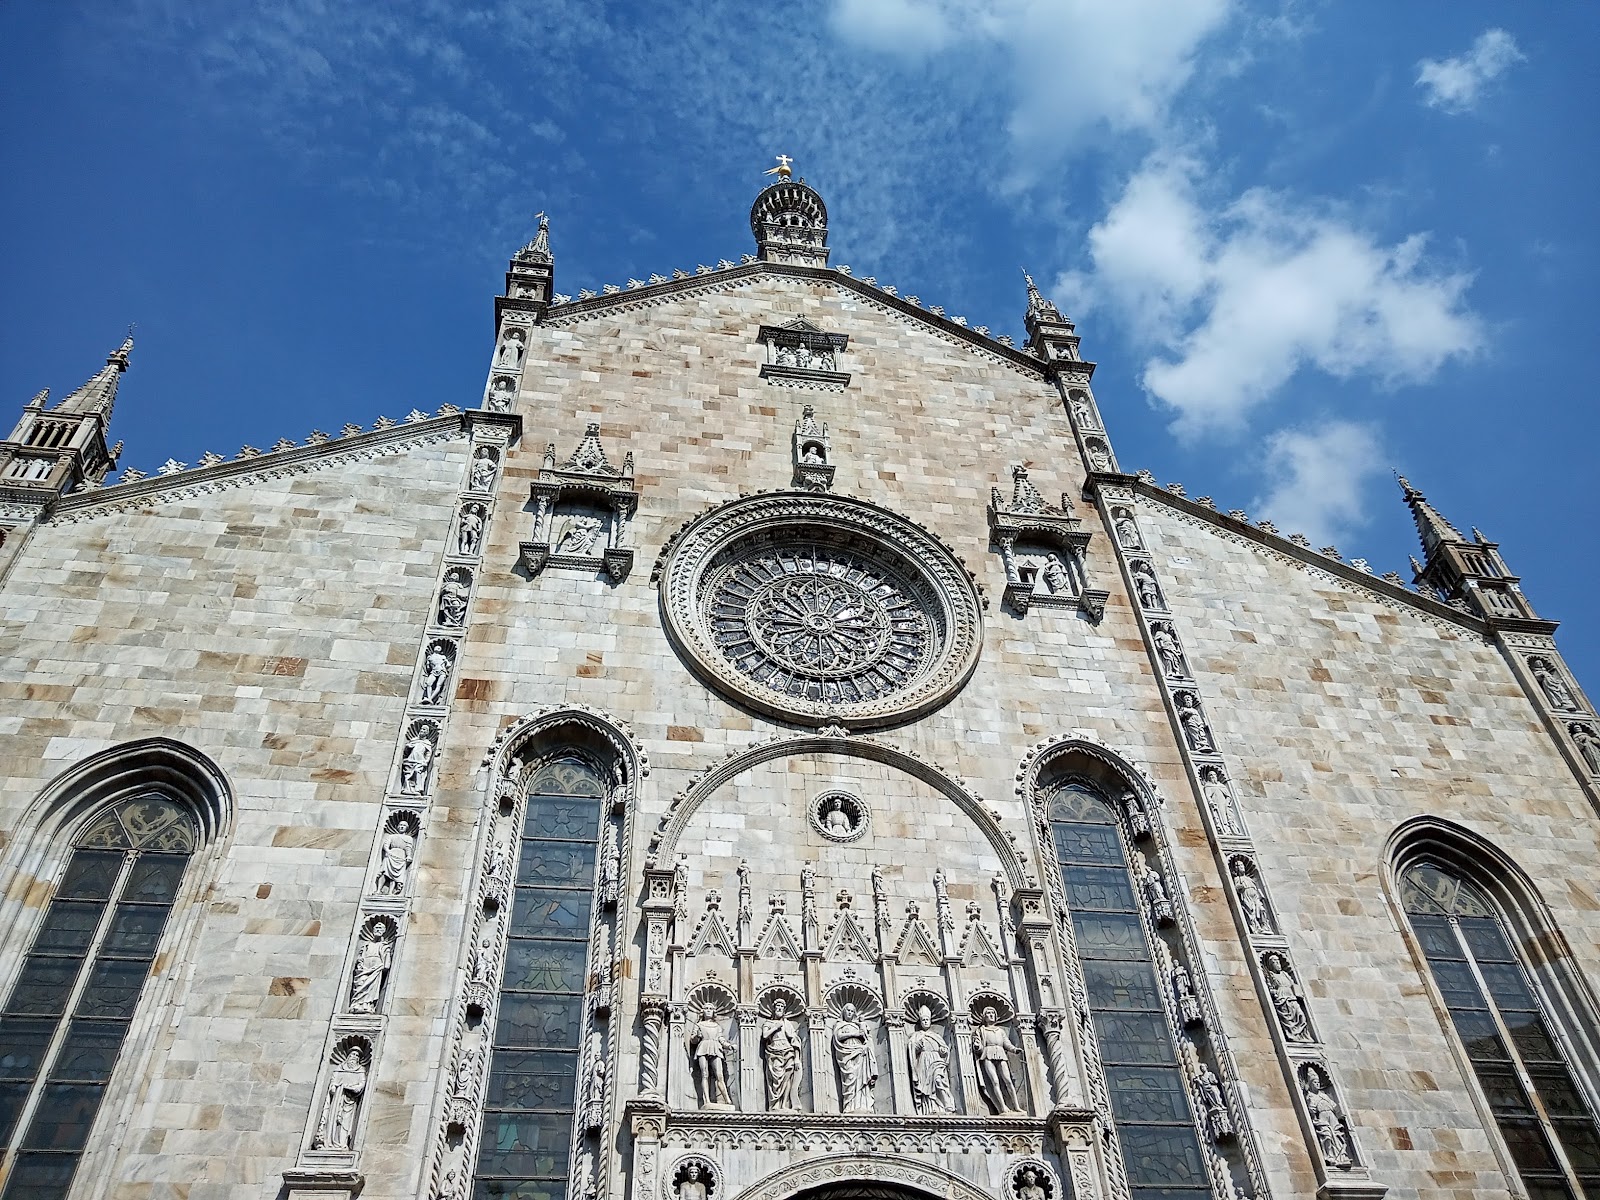 Cattedrale di Santa Maria Assunta - Duomo di Como